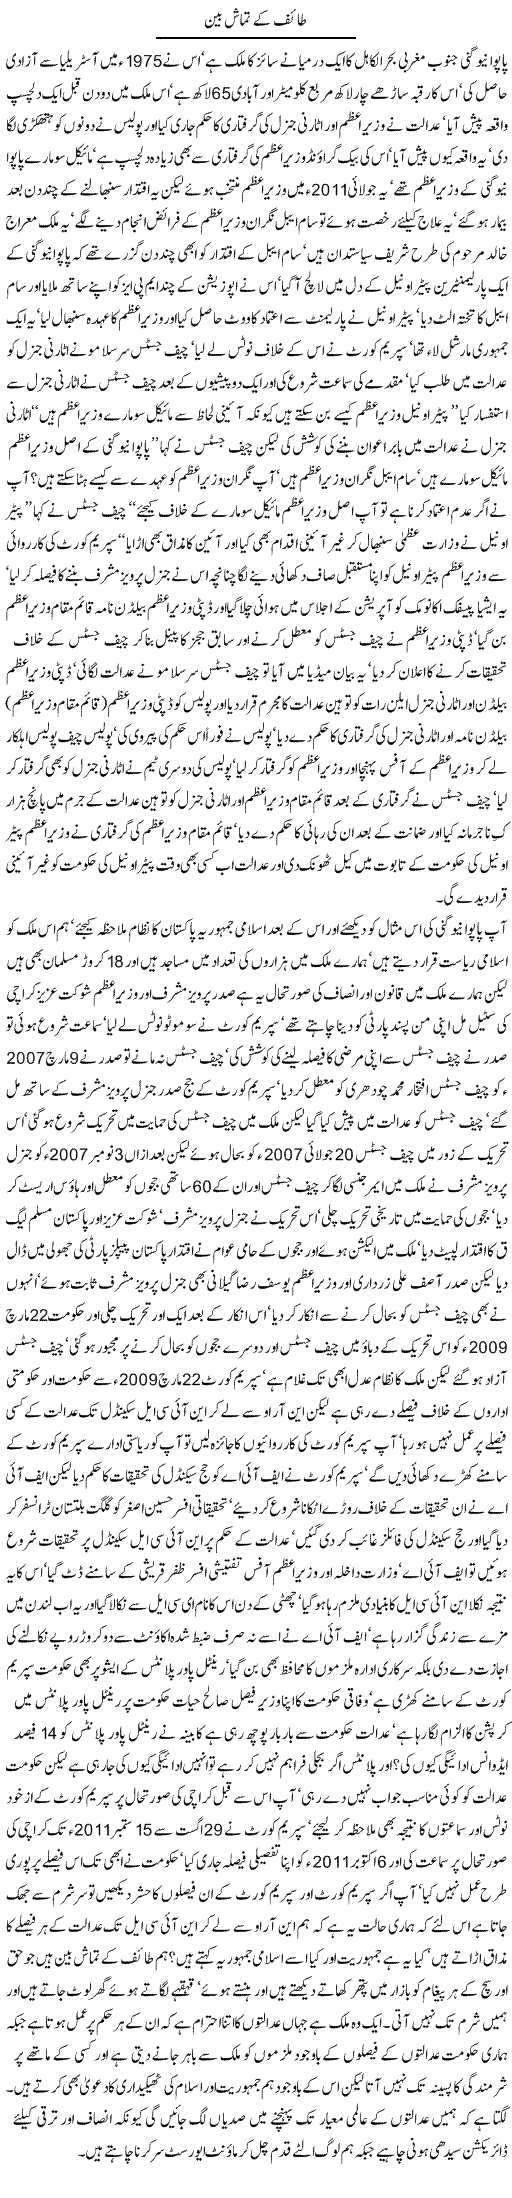 Pakistani Courts Express Column Javed Chaudhry 17 November 2011